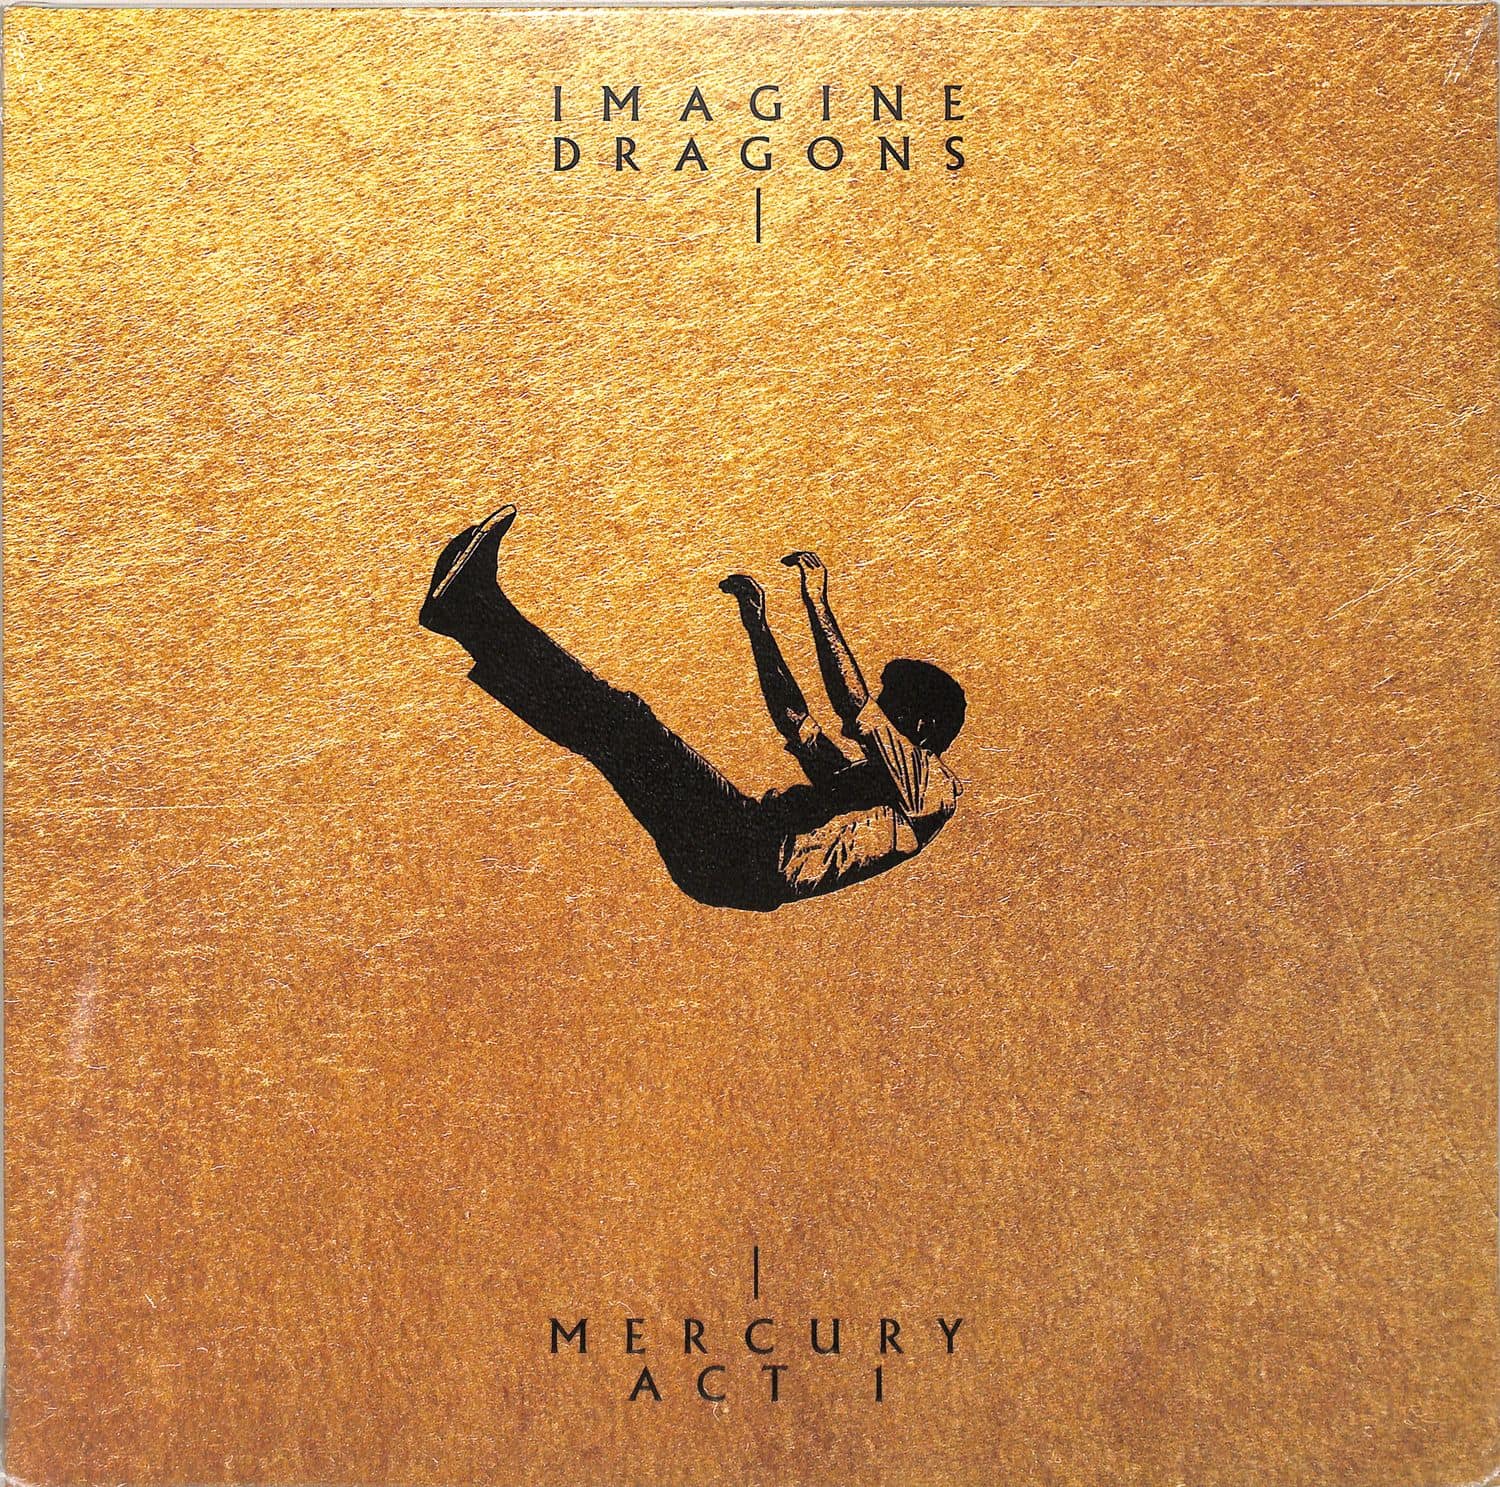 Imagine Dragons - MERCURY - ACT 1 